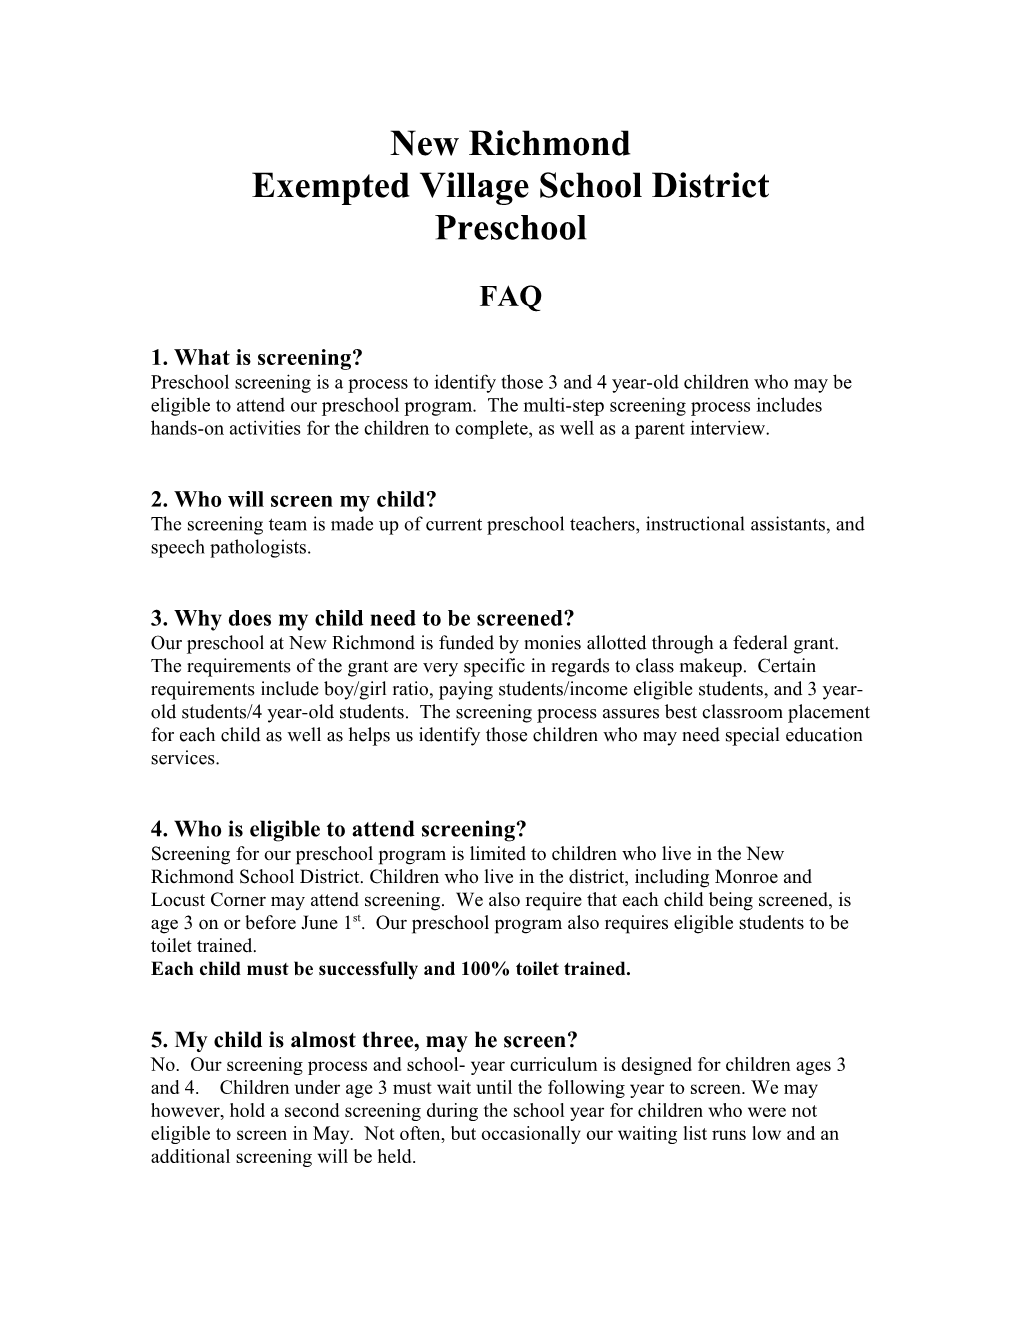 Exempted Villageschool District